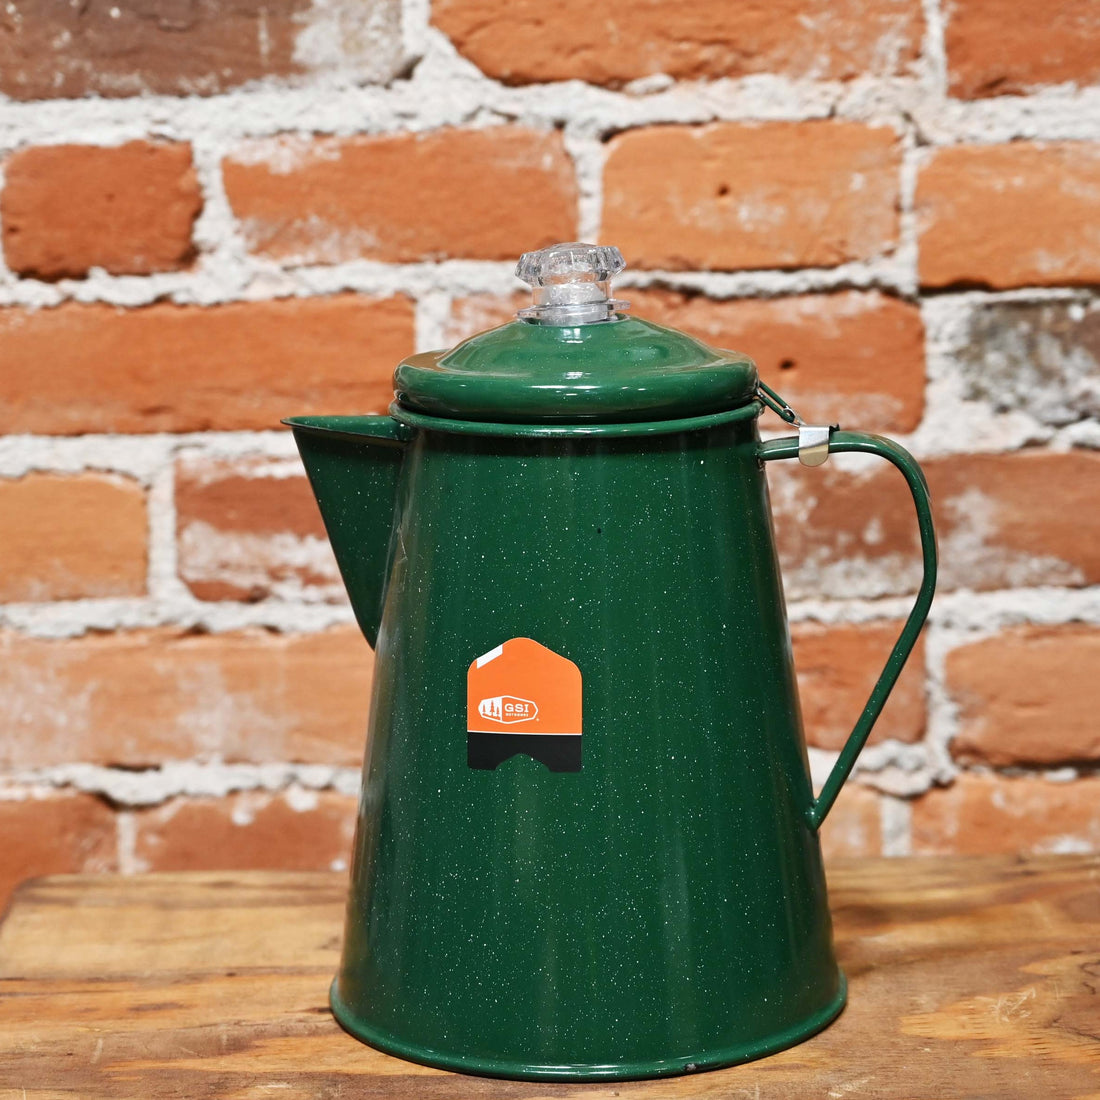 Classic Black Percolator Enamelware Camping Coffee Pot - 12 Cup